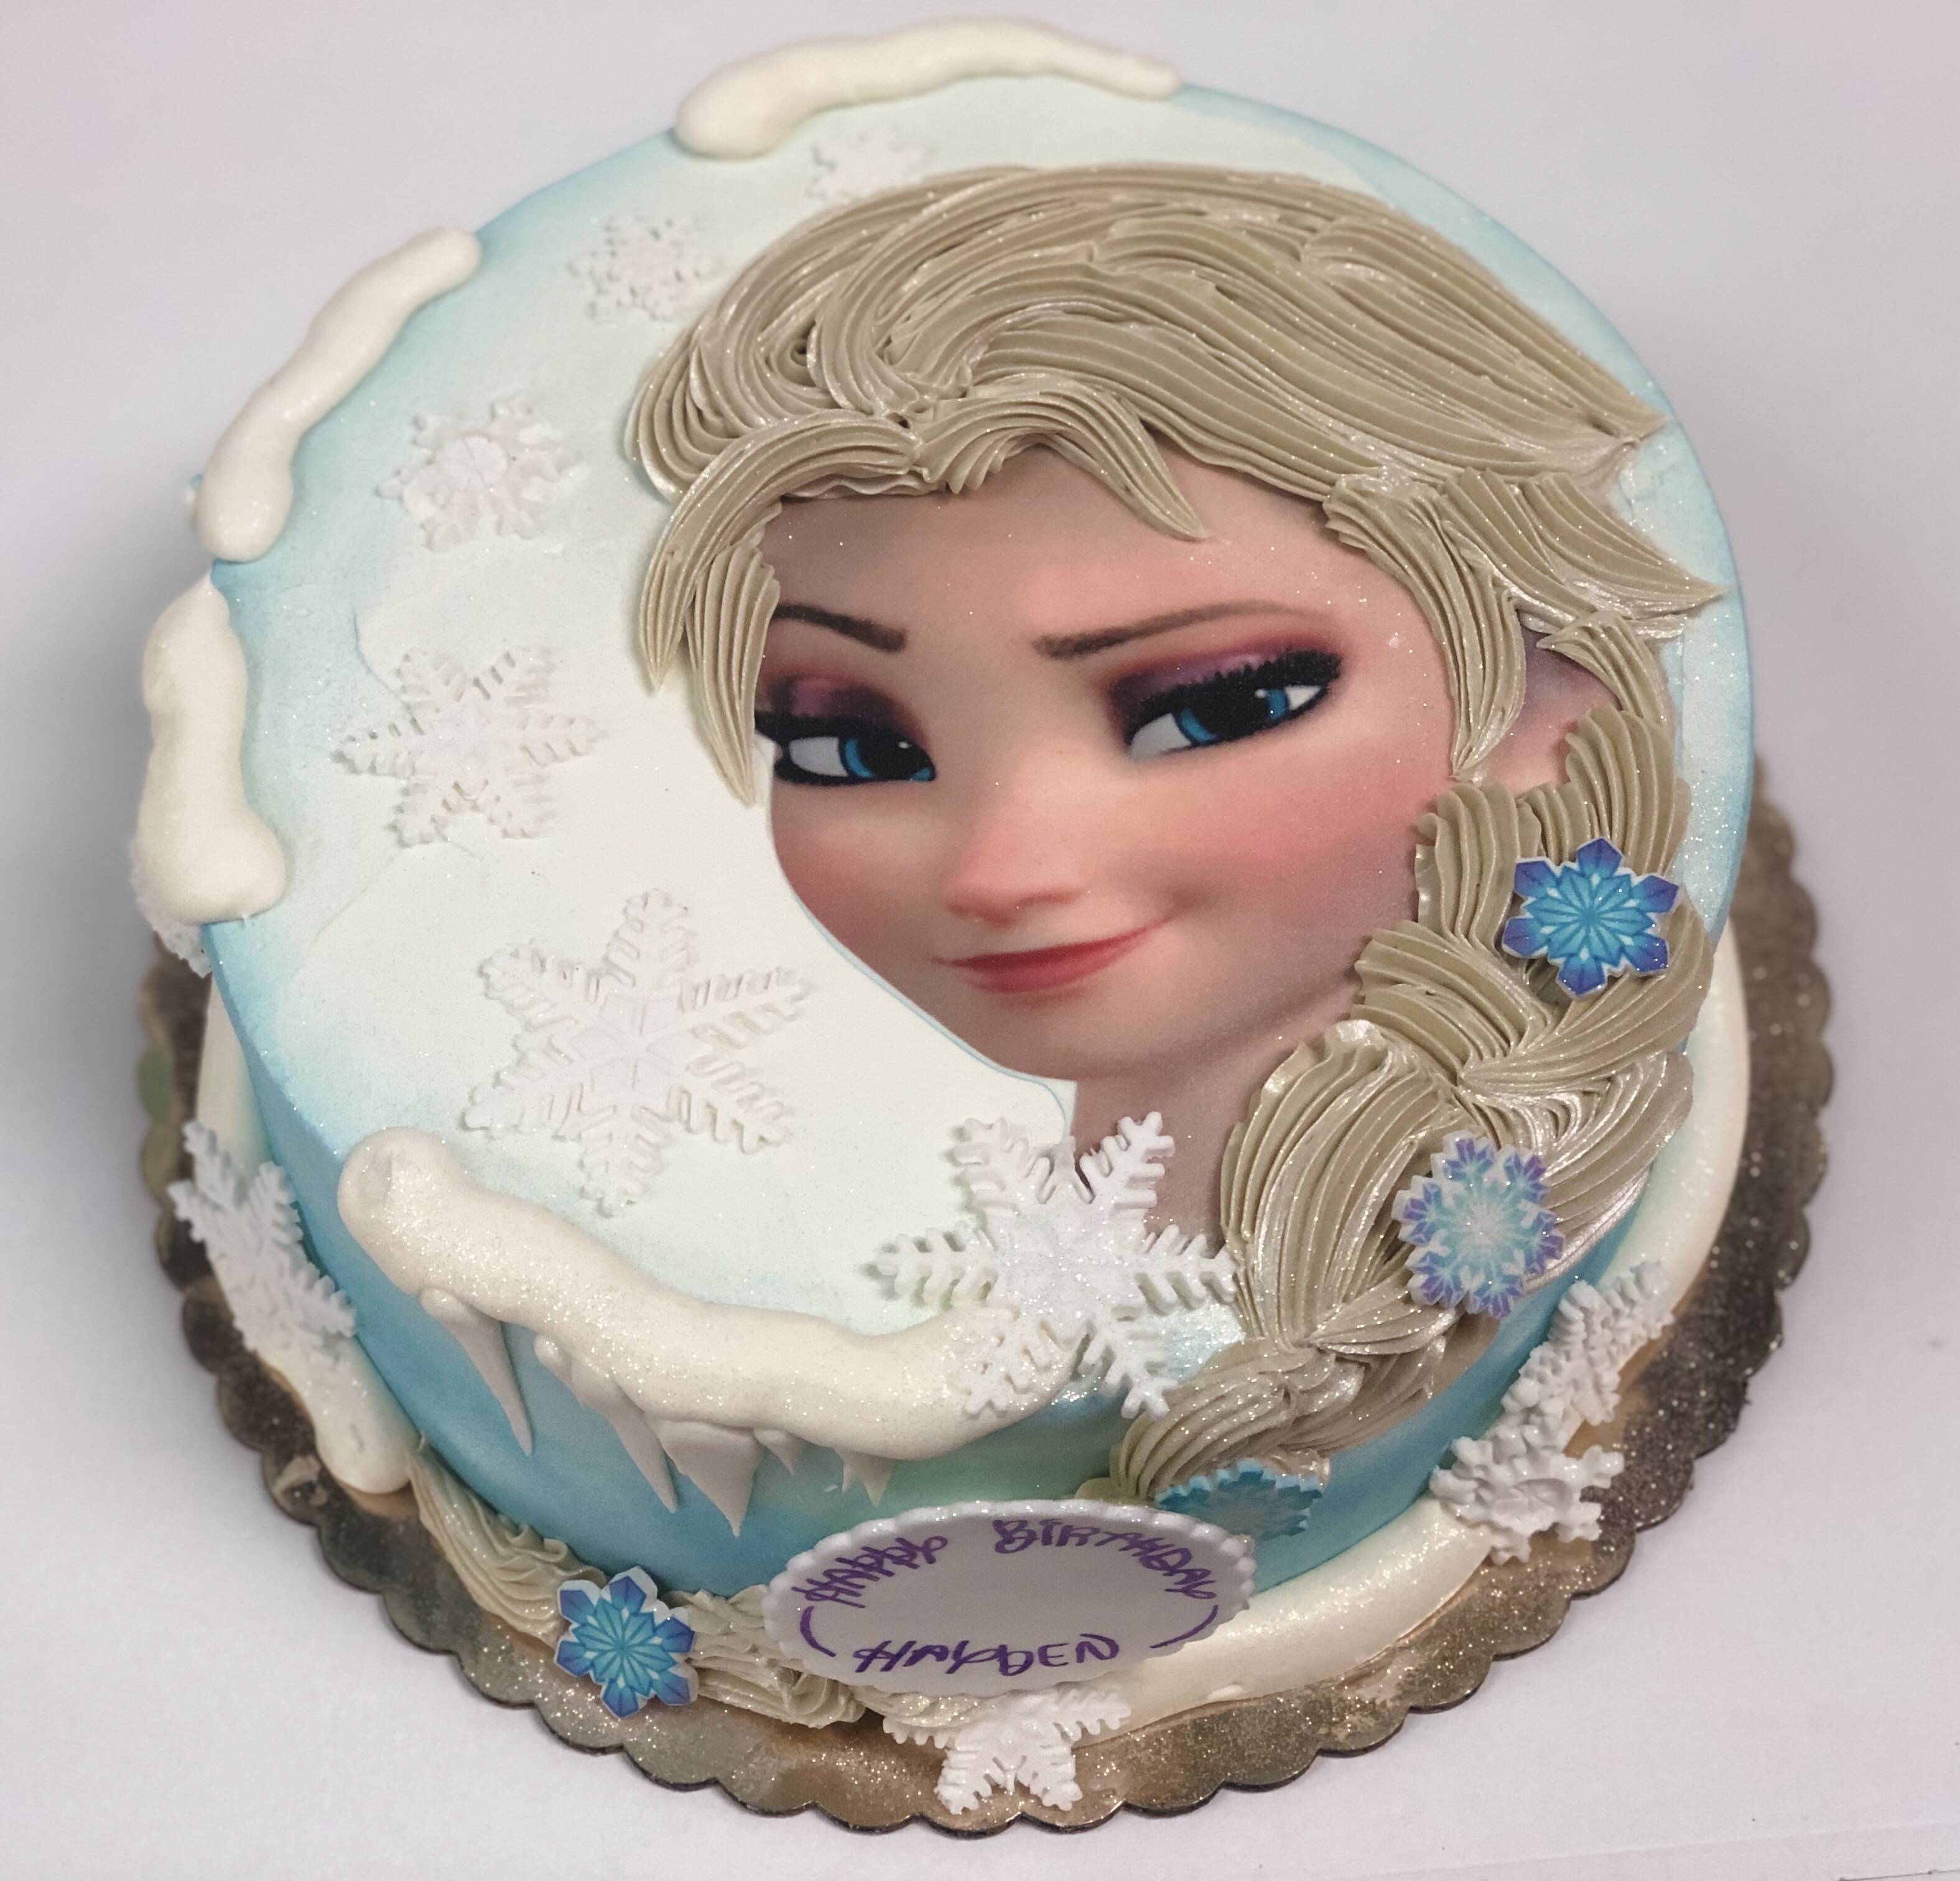 Frozen Cake Topper, Elsa cake image, Frozen edible image, Frozen birthday  Party | eBay